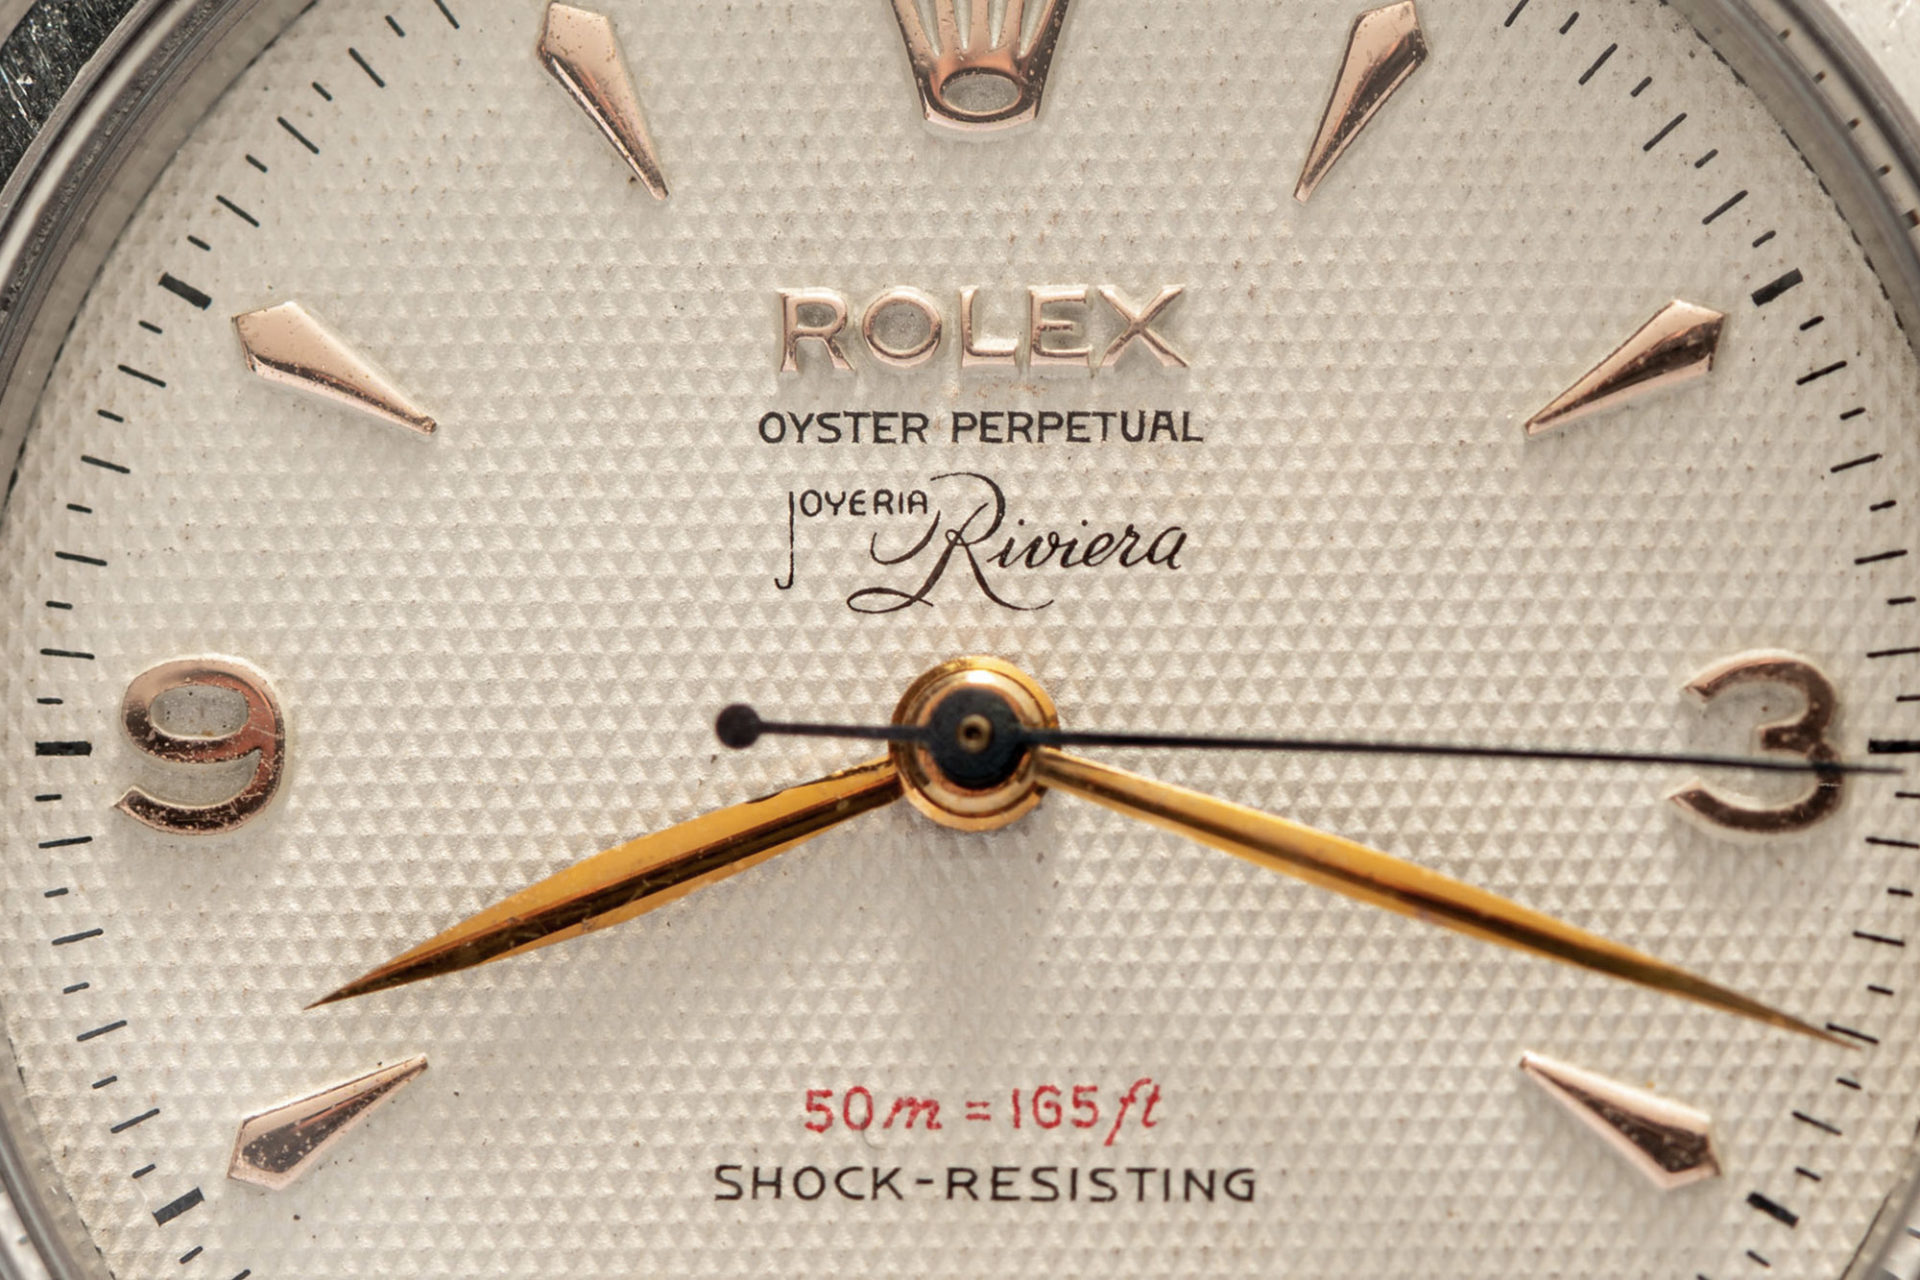 Antiquorum - Vente de montres du 28 juin - Rolex Oyster Perpetual Joyeria Riviera